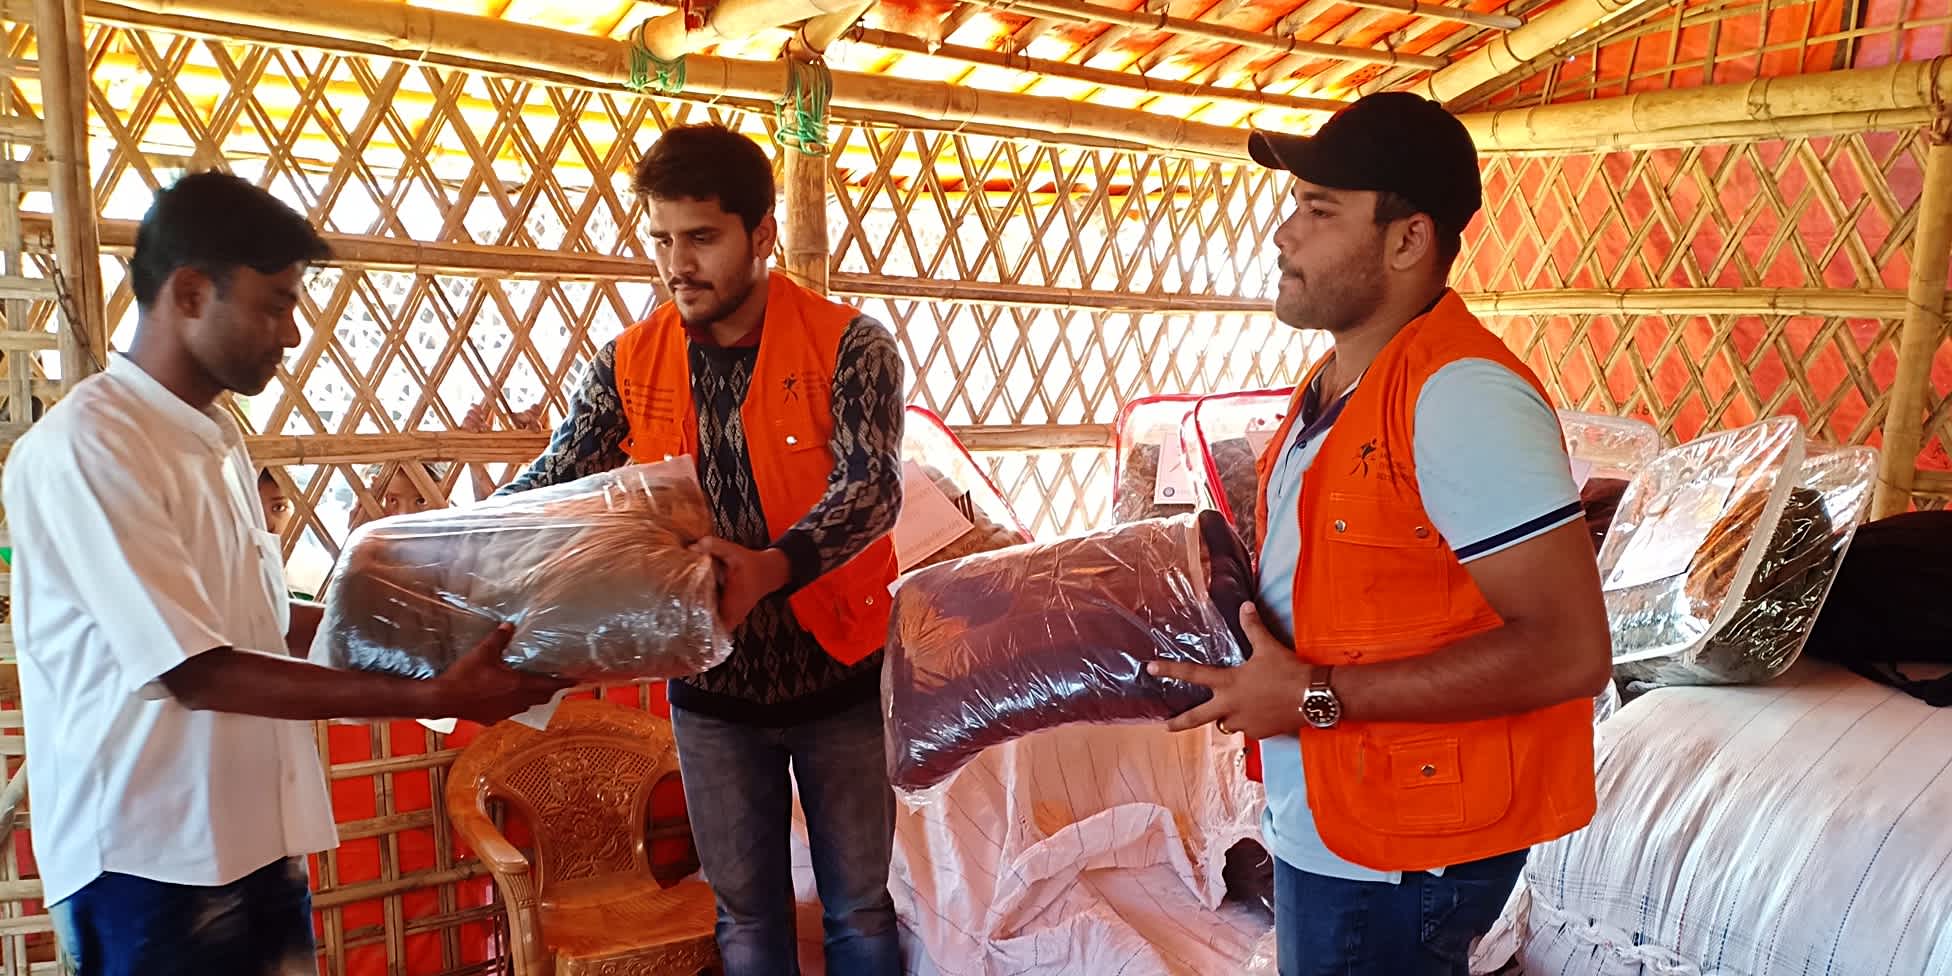 Runner Bangladesh officials distributing warm clothes to displaced Rohingya